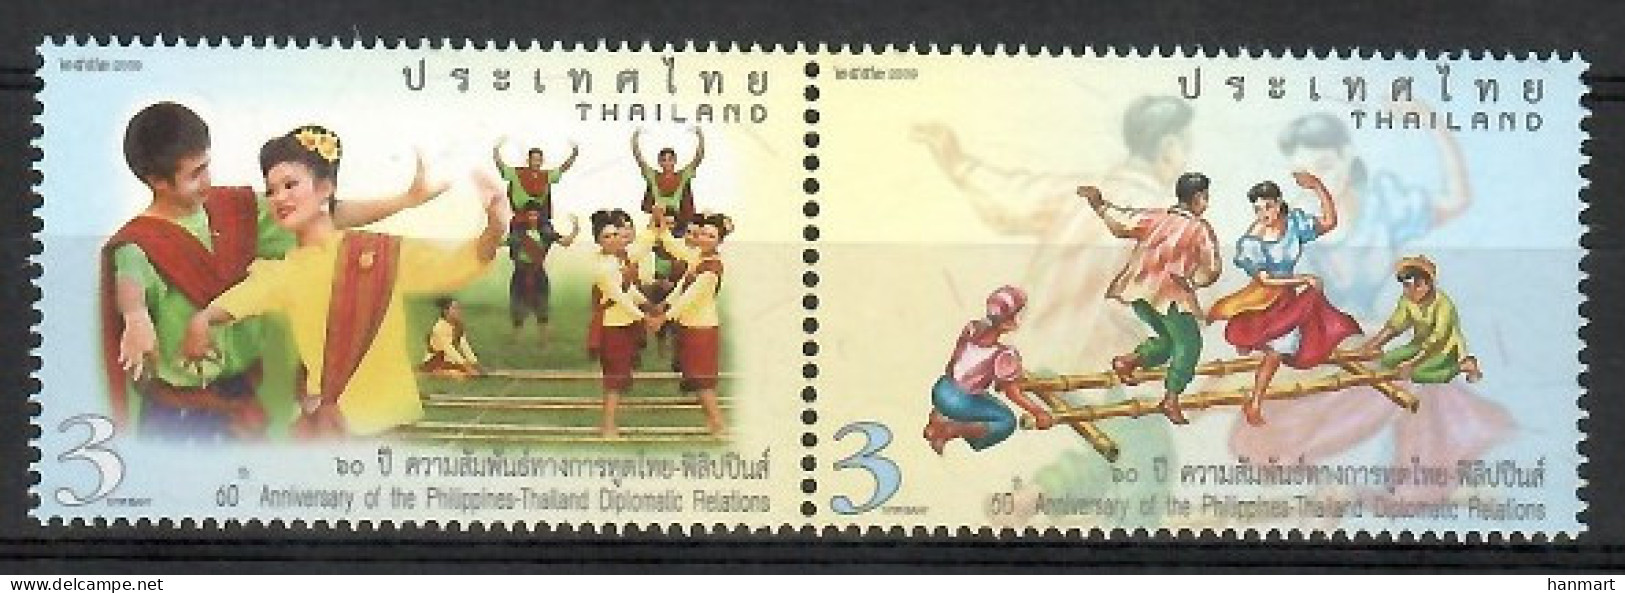 Thailand 2009 Mi 2813-2814 MNH  (ZS8 THLpar2813-2814) - Music